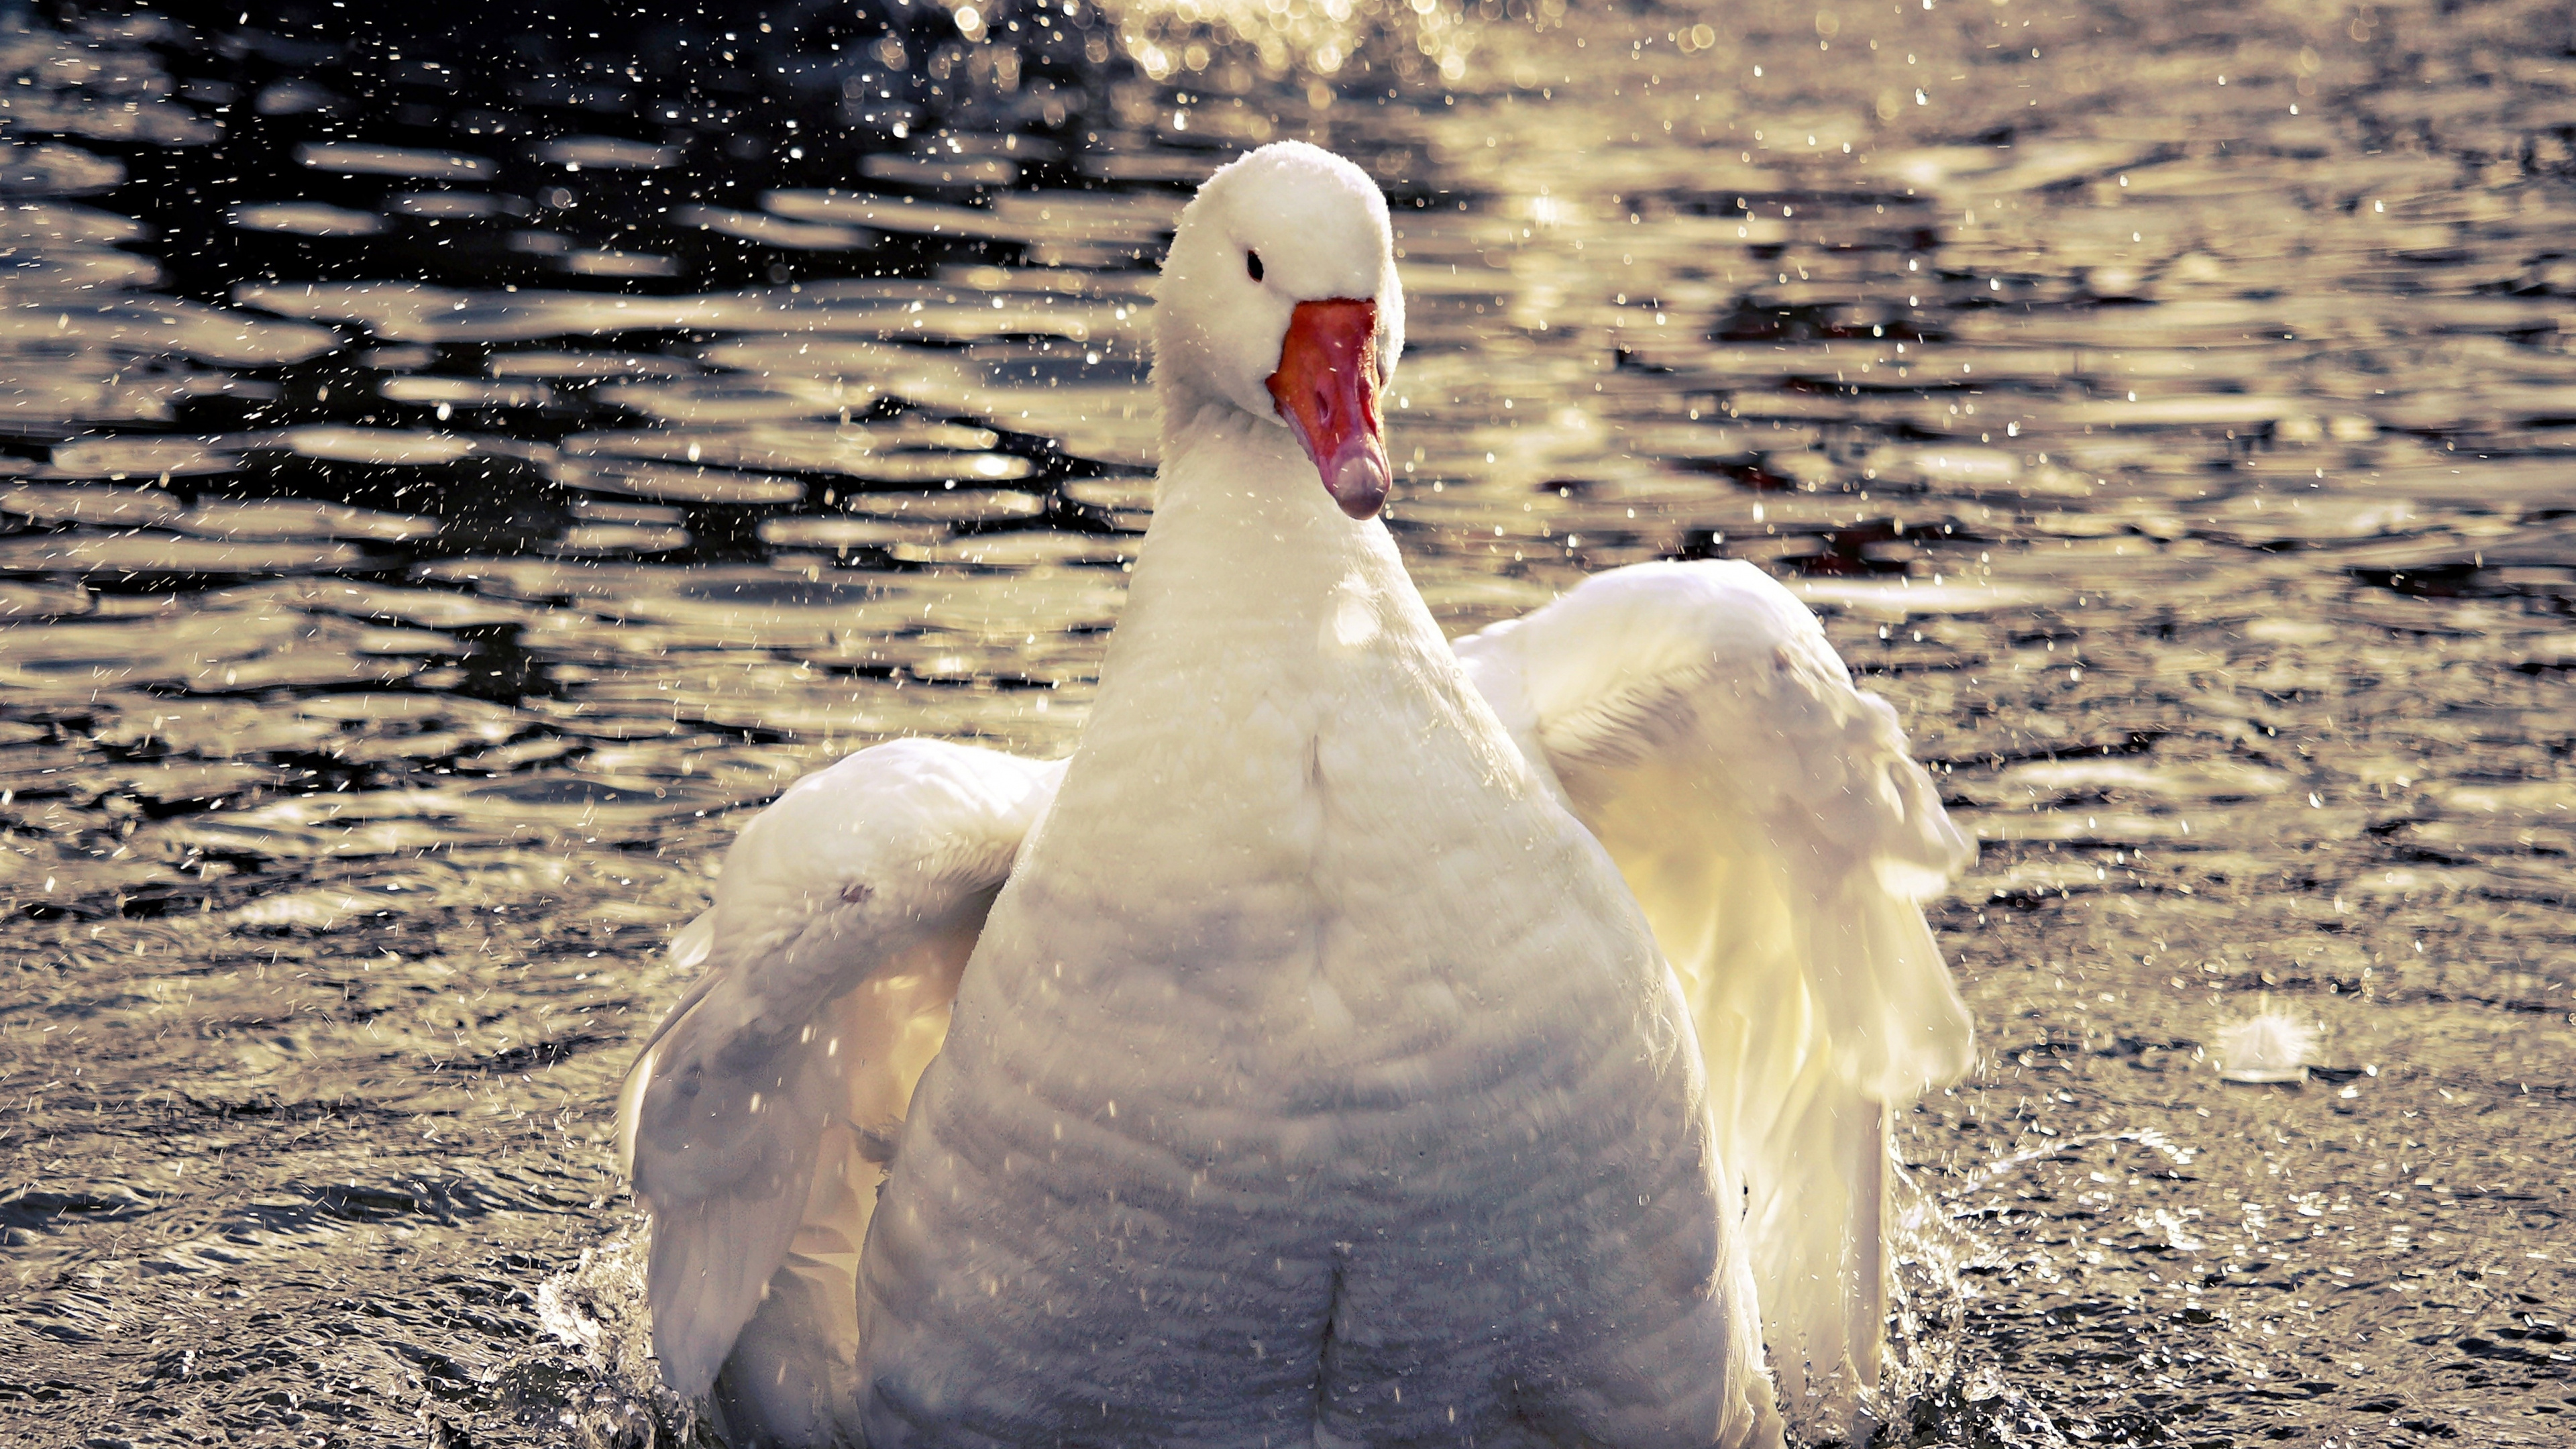 Swimming goose, White bird, 4K wallpaper, Widescreen format, 3840x2160 4K Desktop